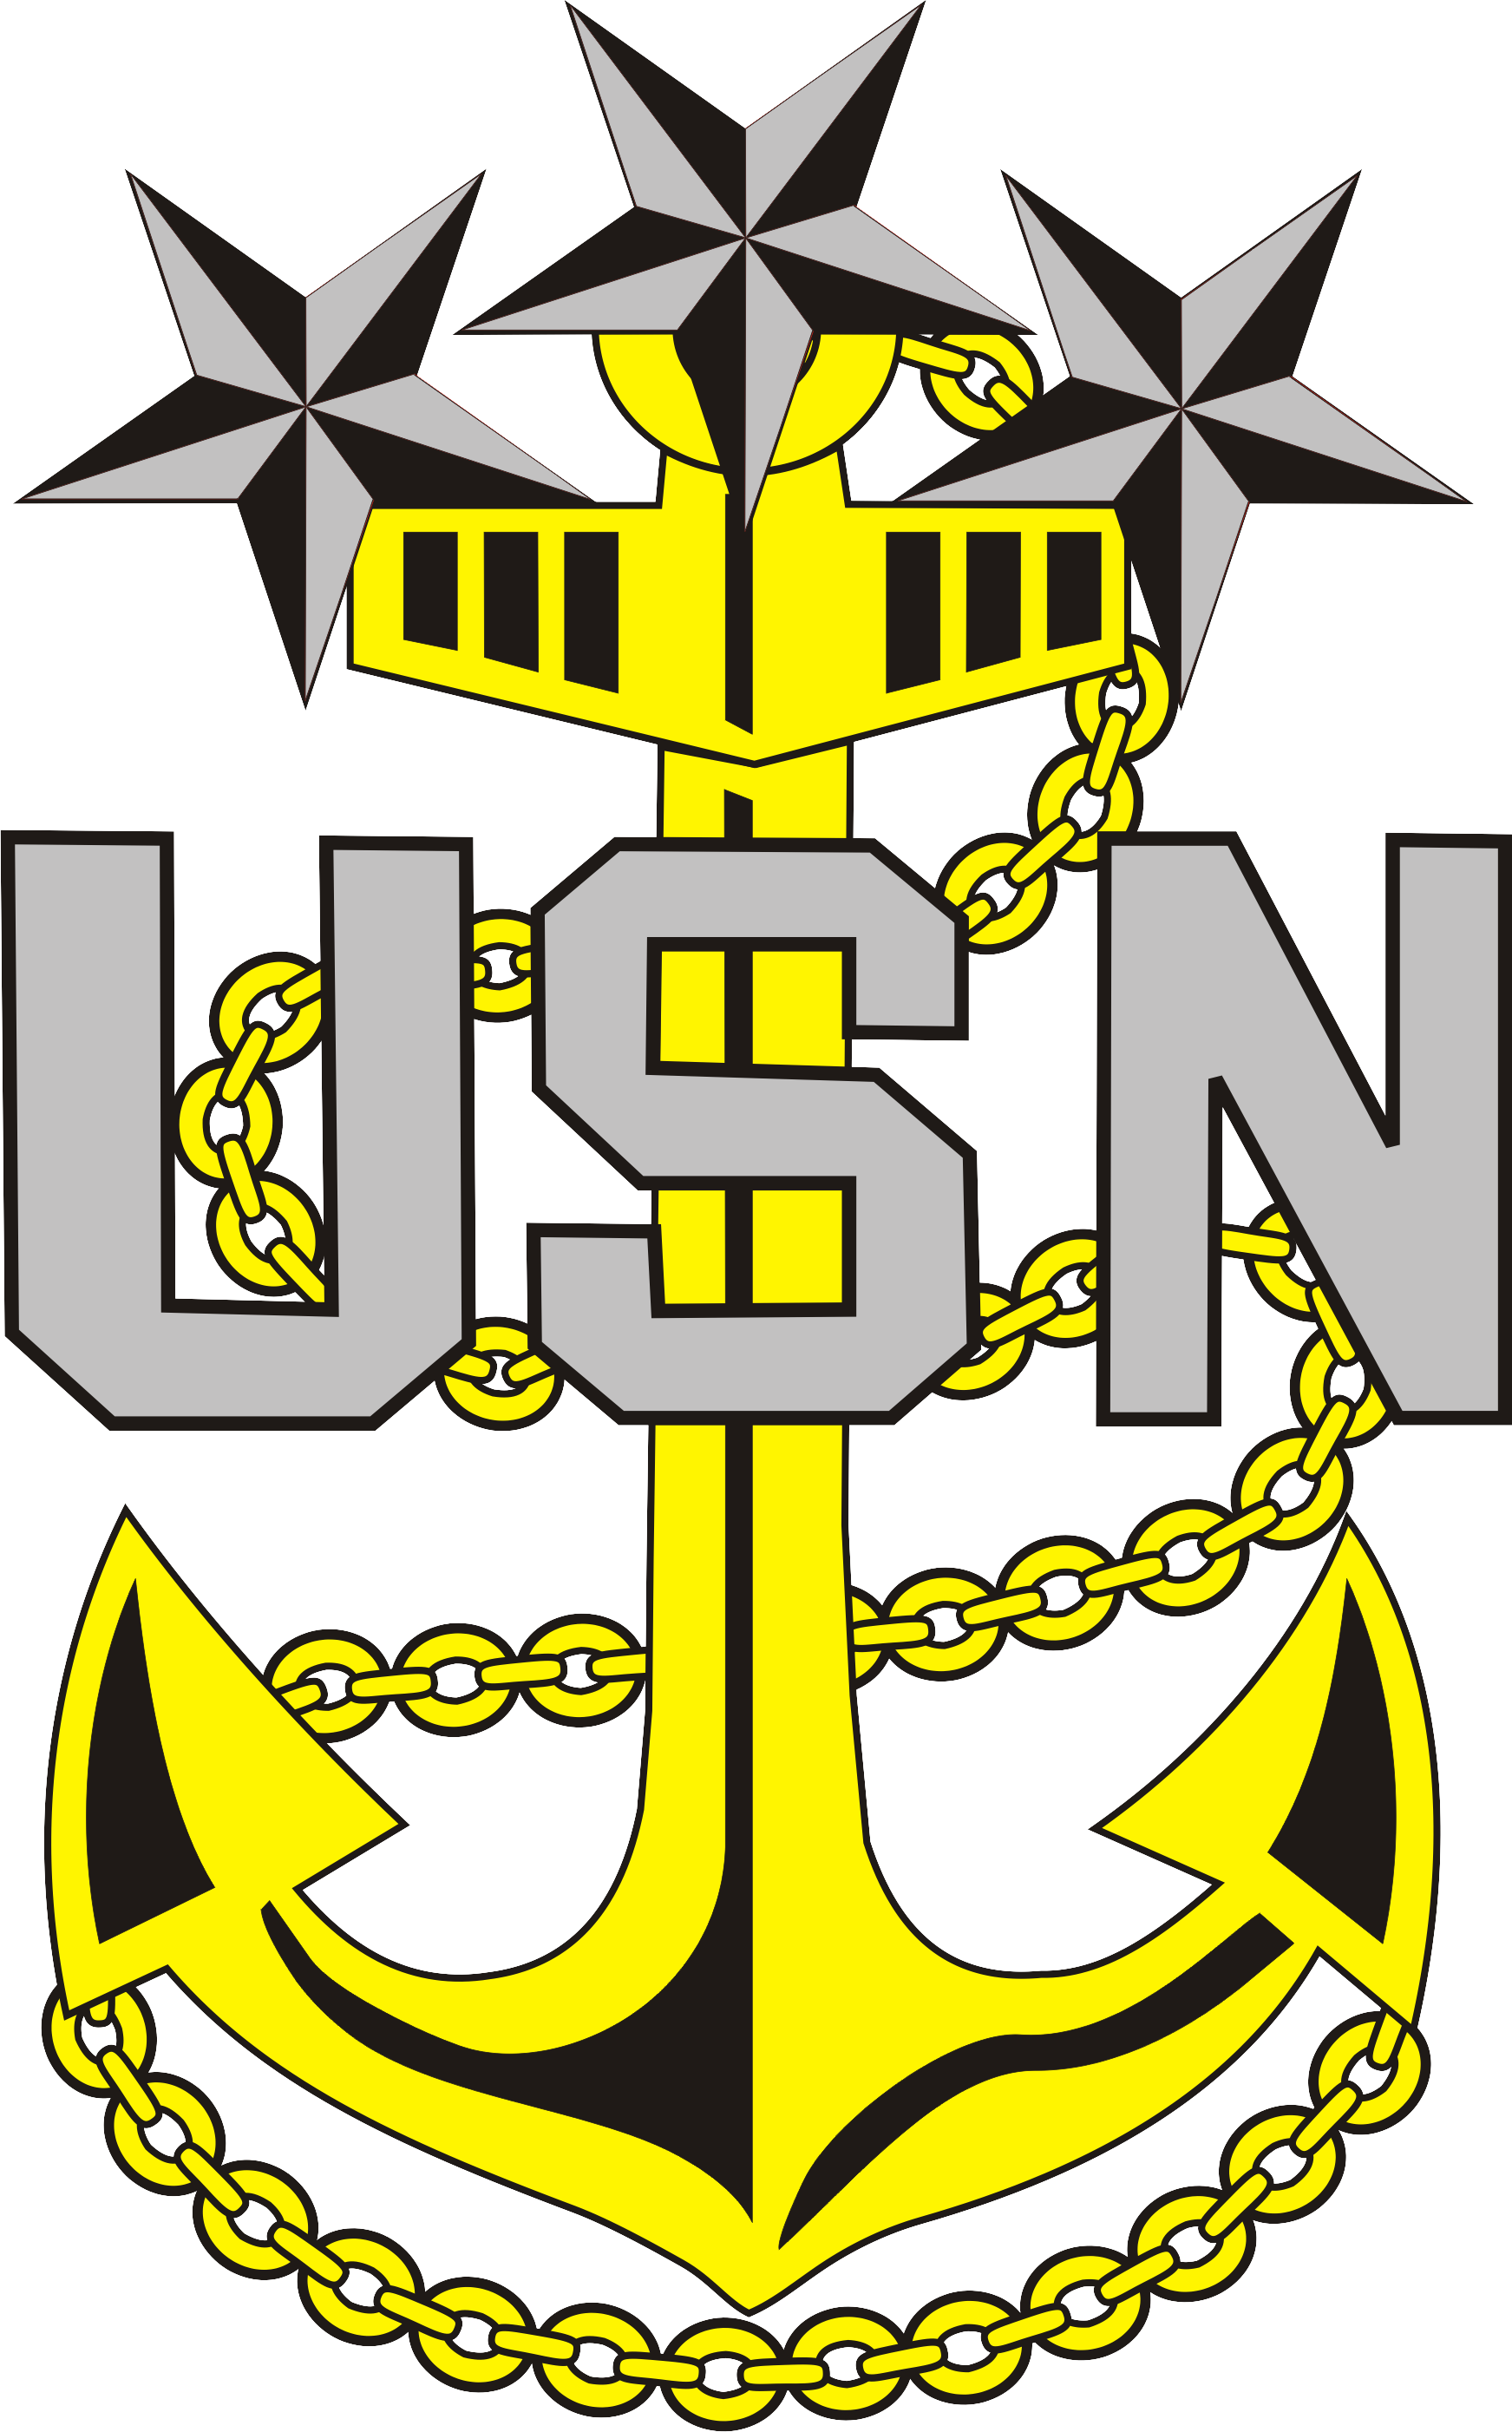 navy anchor logo png